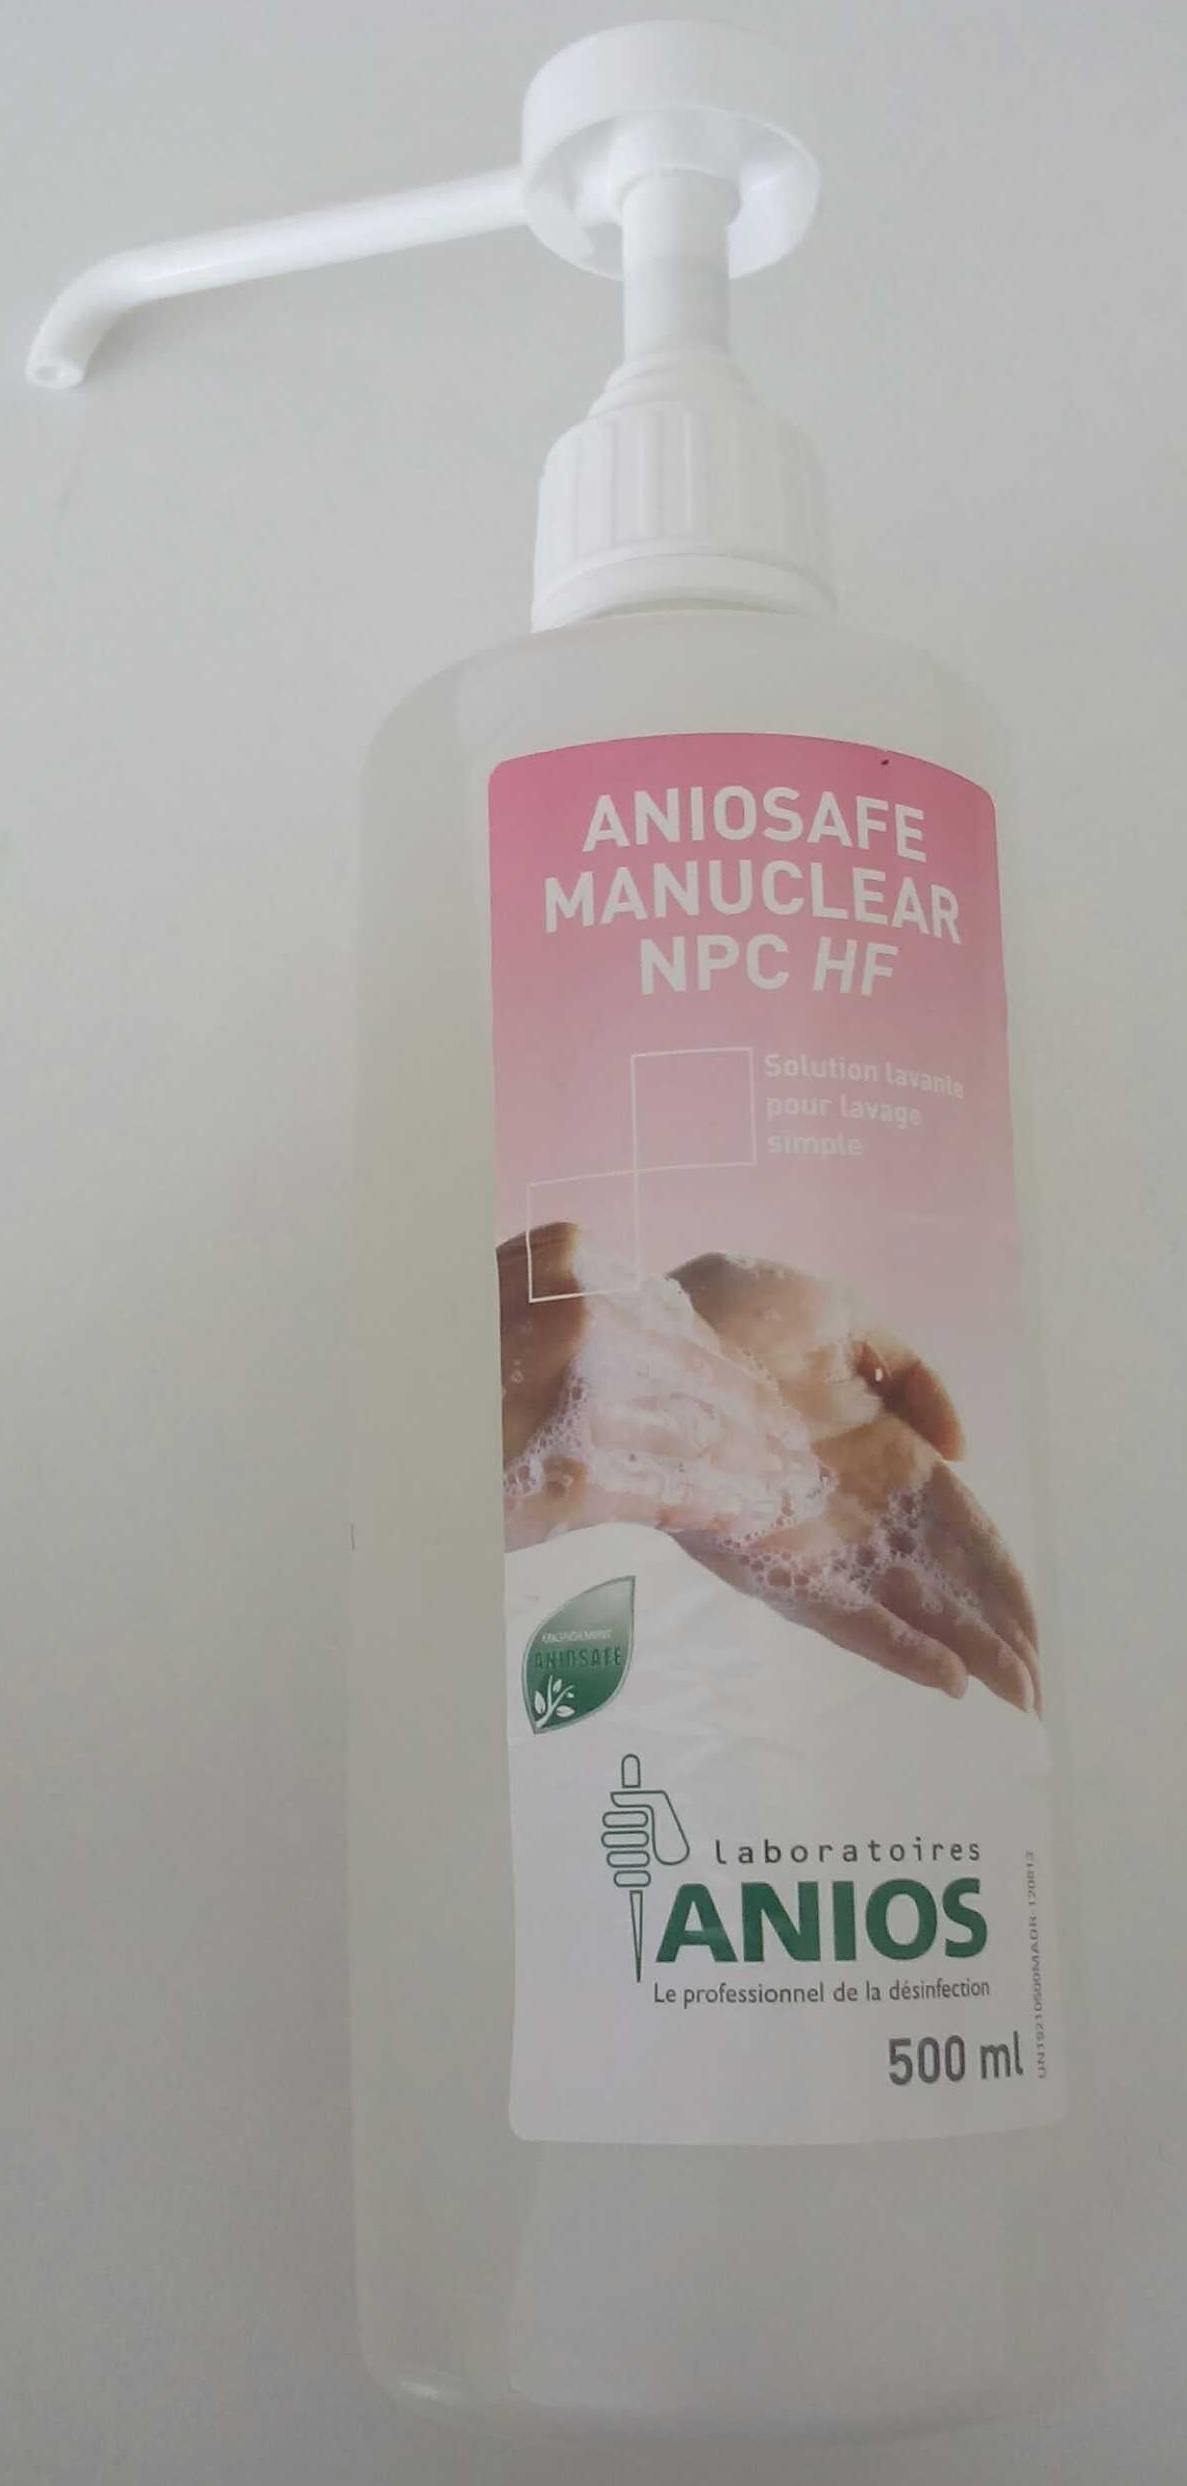 Aniosafe Manuclear NPC HF - 製品 - fr